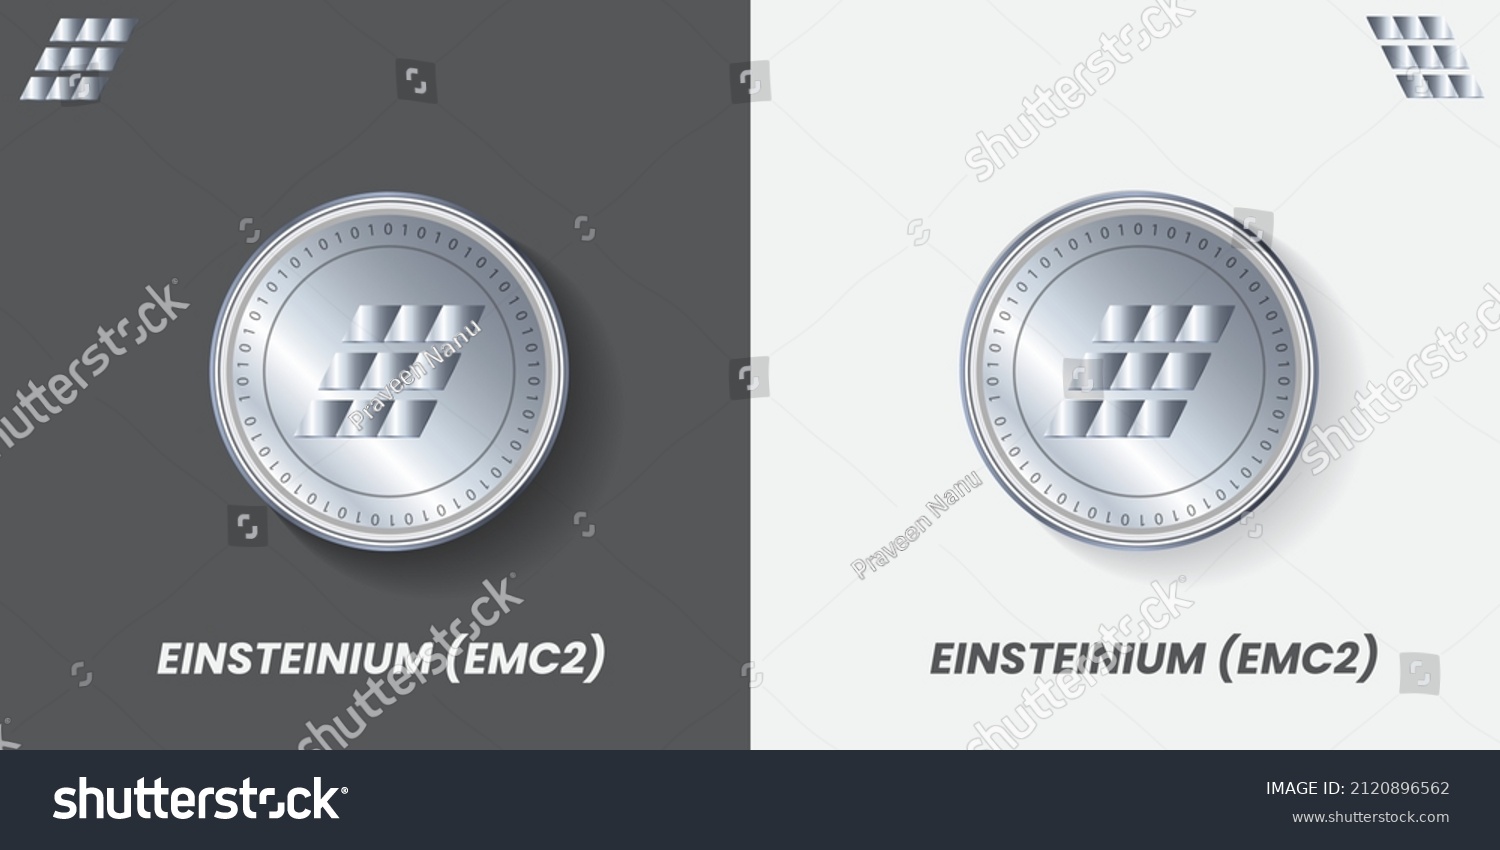 Emc2 crypto price